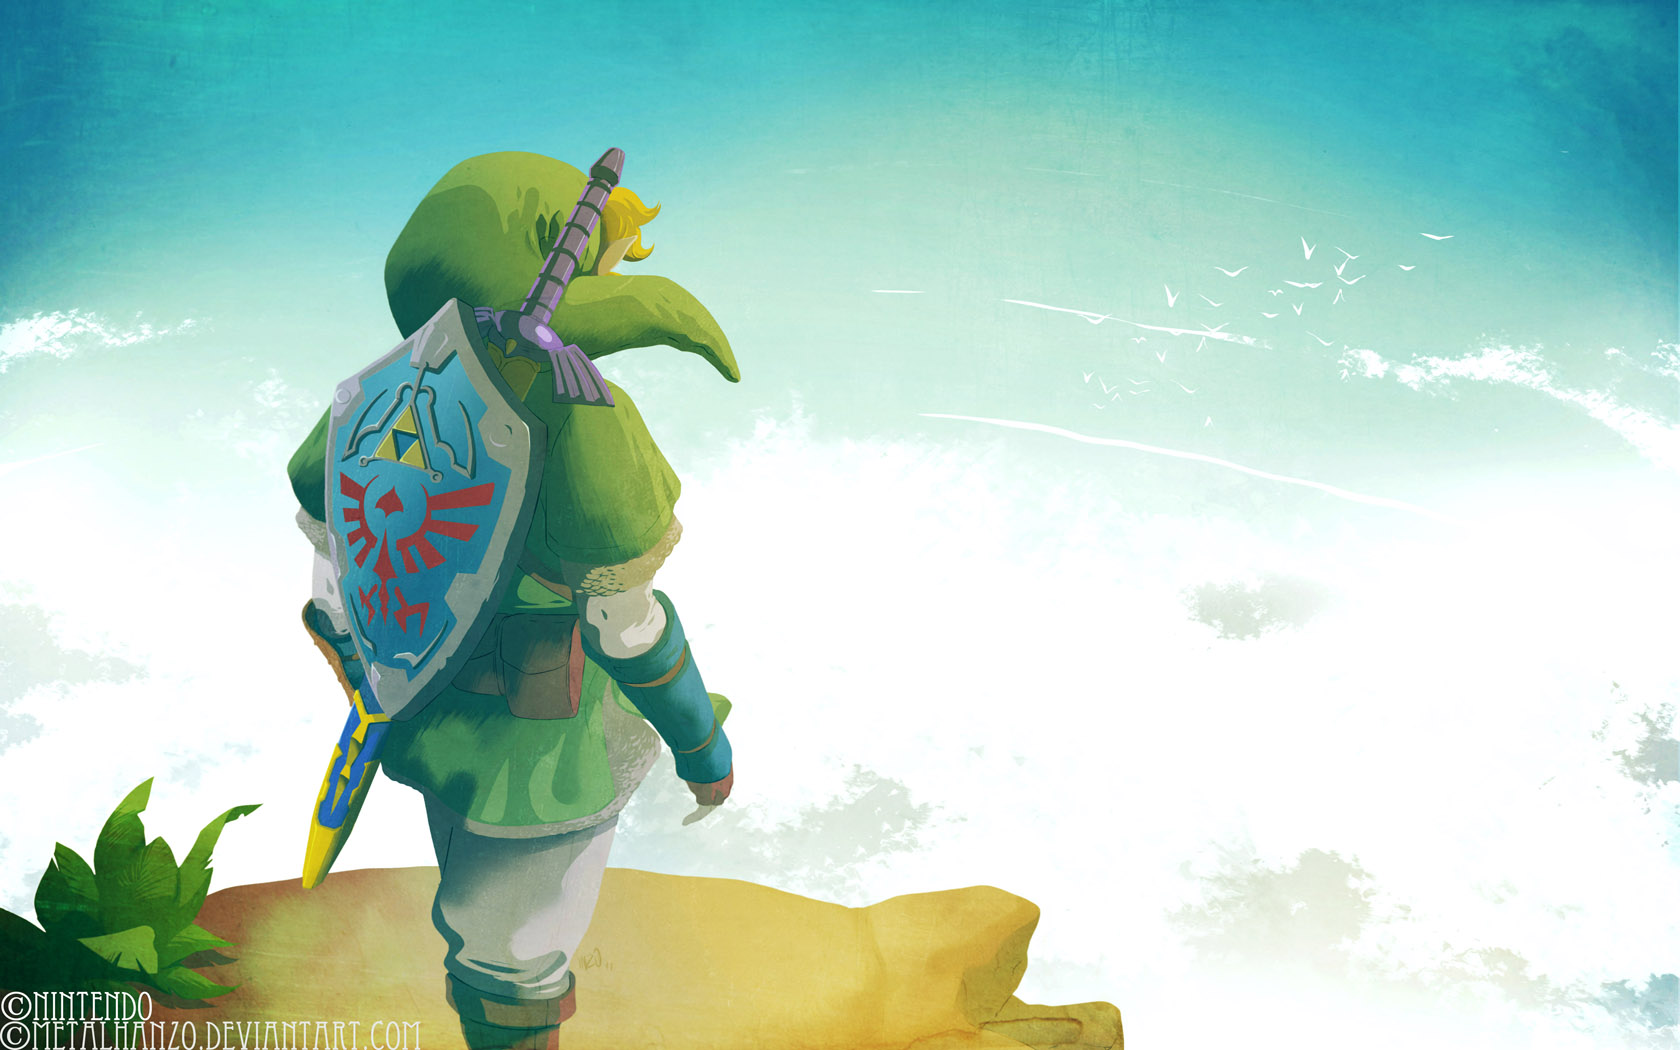 Video Game The Legend Of Zelda: Skyward Sword HD Wallpaper | Background Image